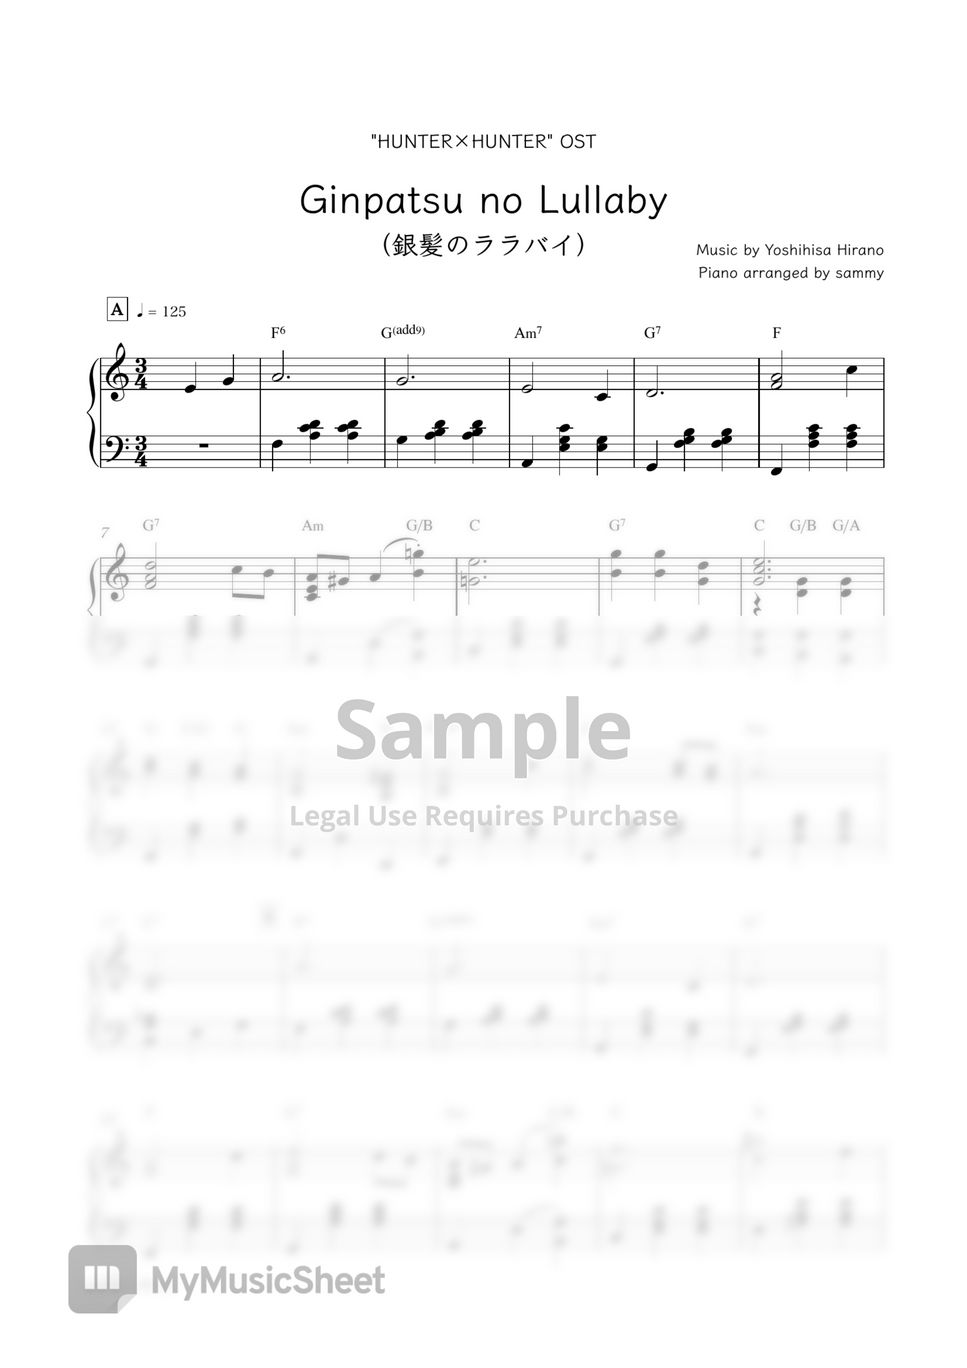 “HUNTER×HUNTER” OST - Ginpatsu no Lullaby (銀髪のララバイ) by sammy